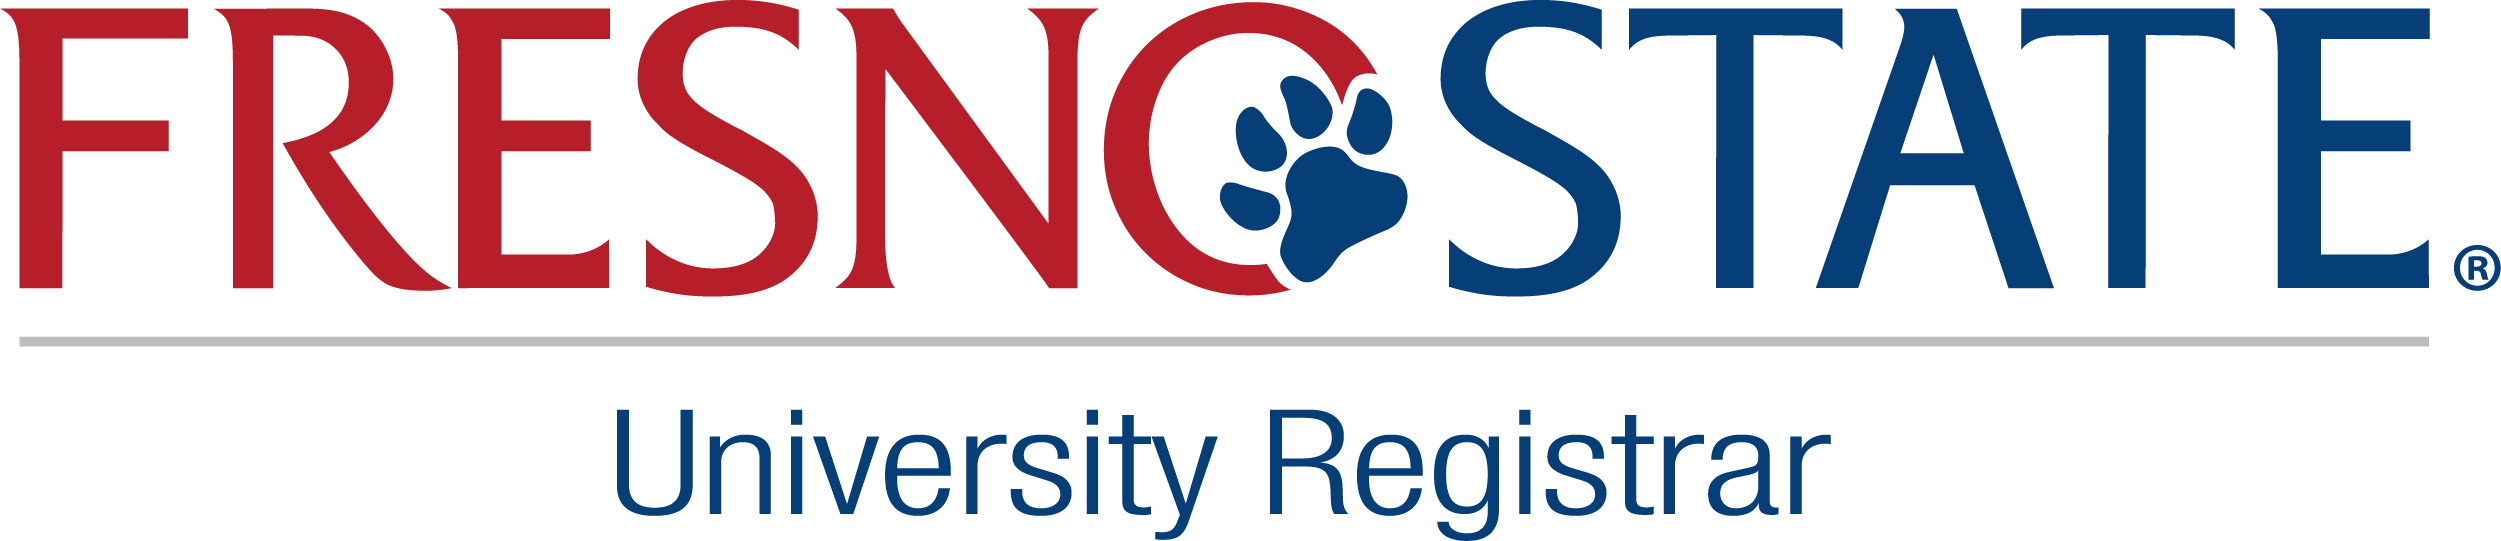 FS University Registrar Logo